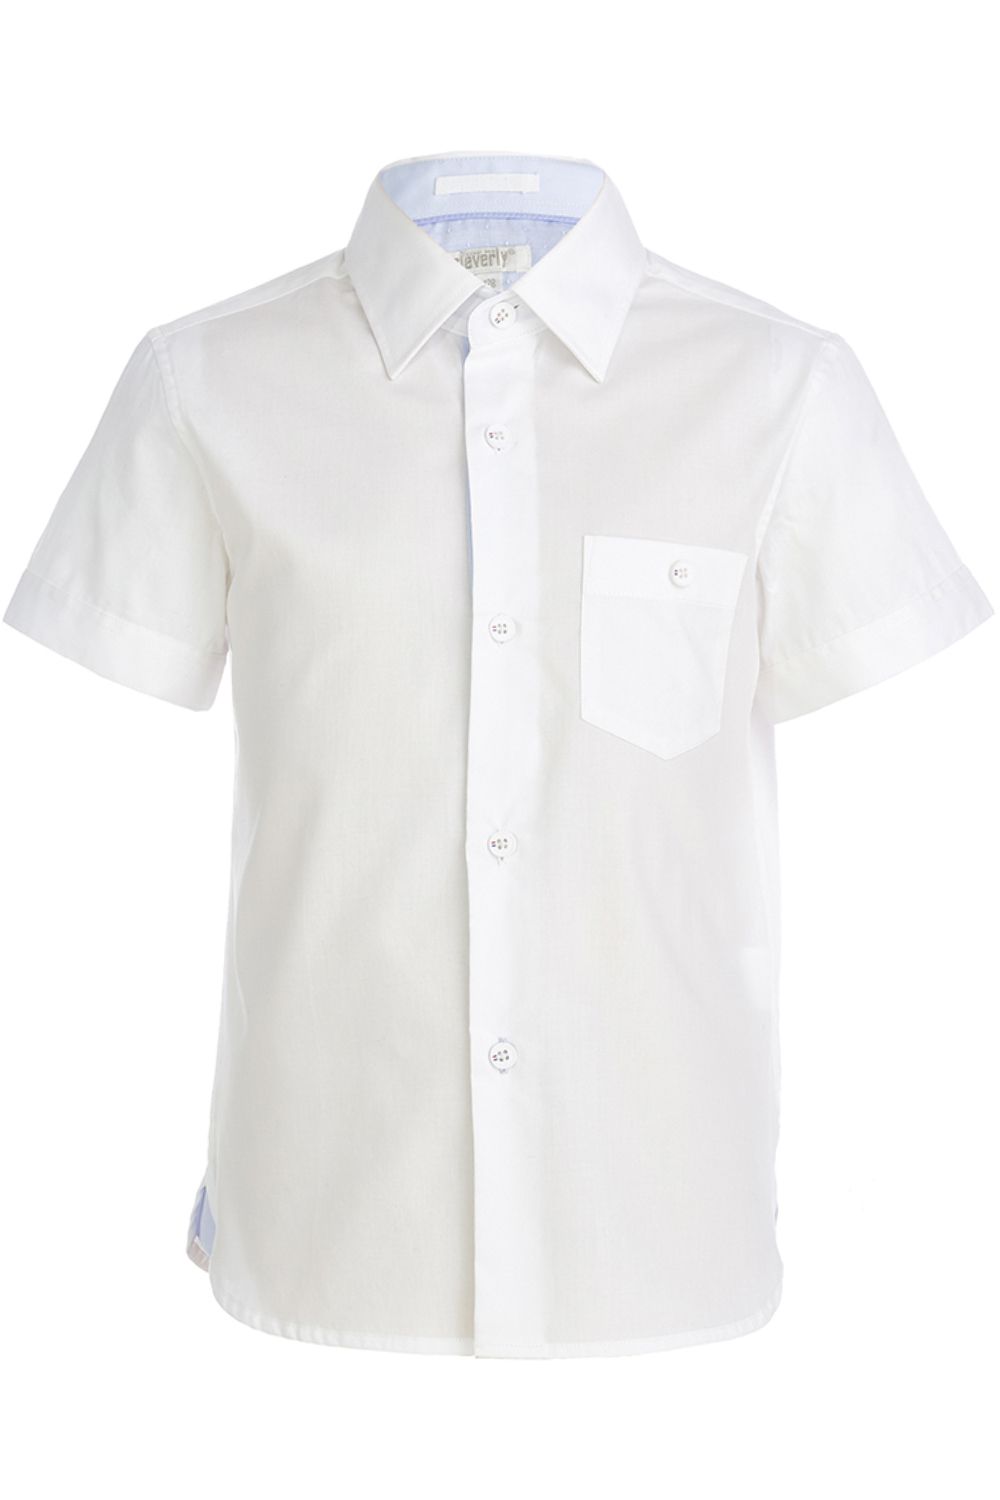 Сорочка Cleverly, размер 140, цвет белый